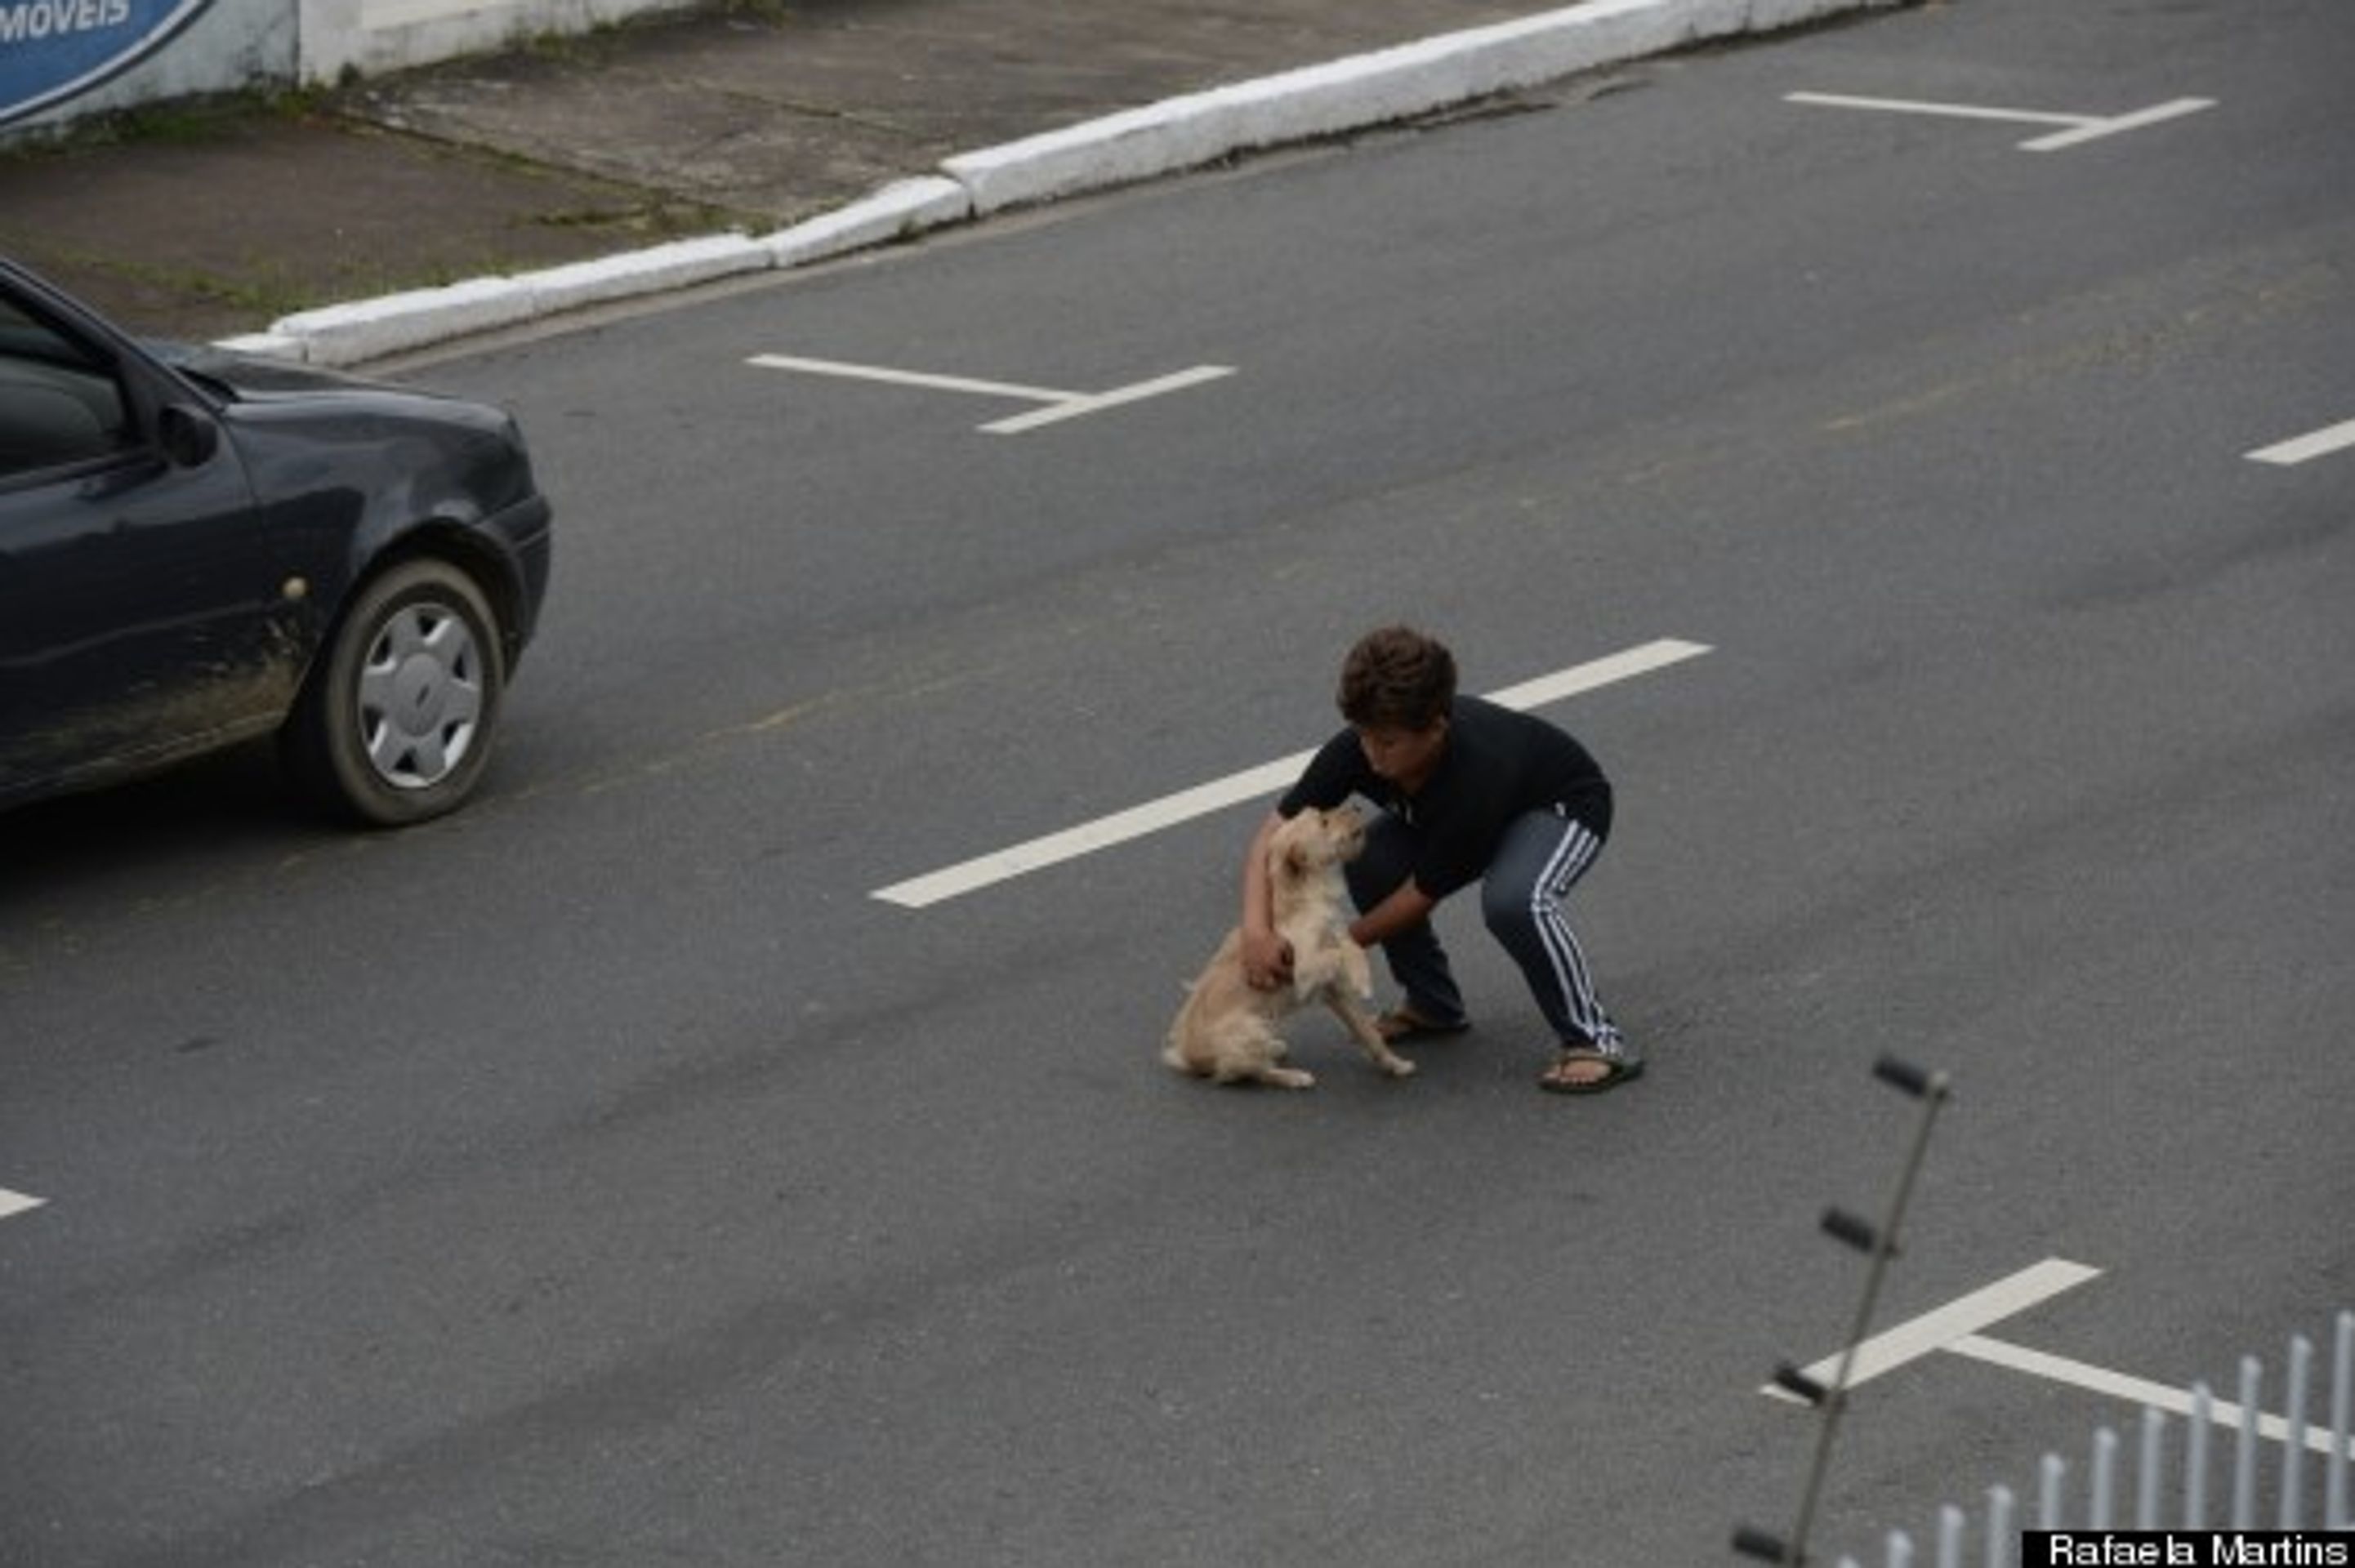 Chlapec zachránil zraněného pejska ze silnice - GALERIE: Chlapec zachránil zraněného psa ze silnice (2/3)